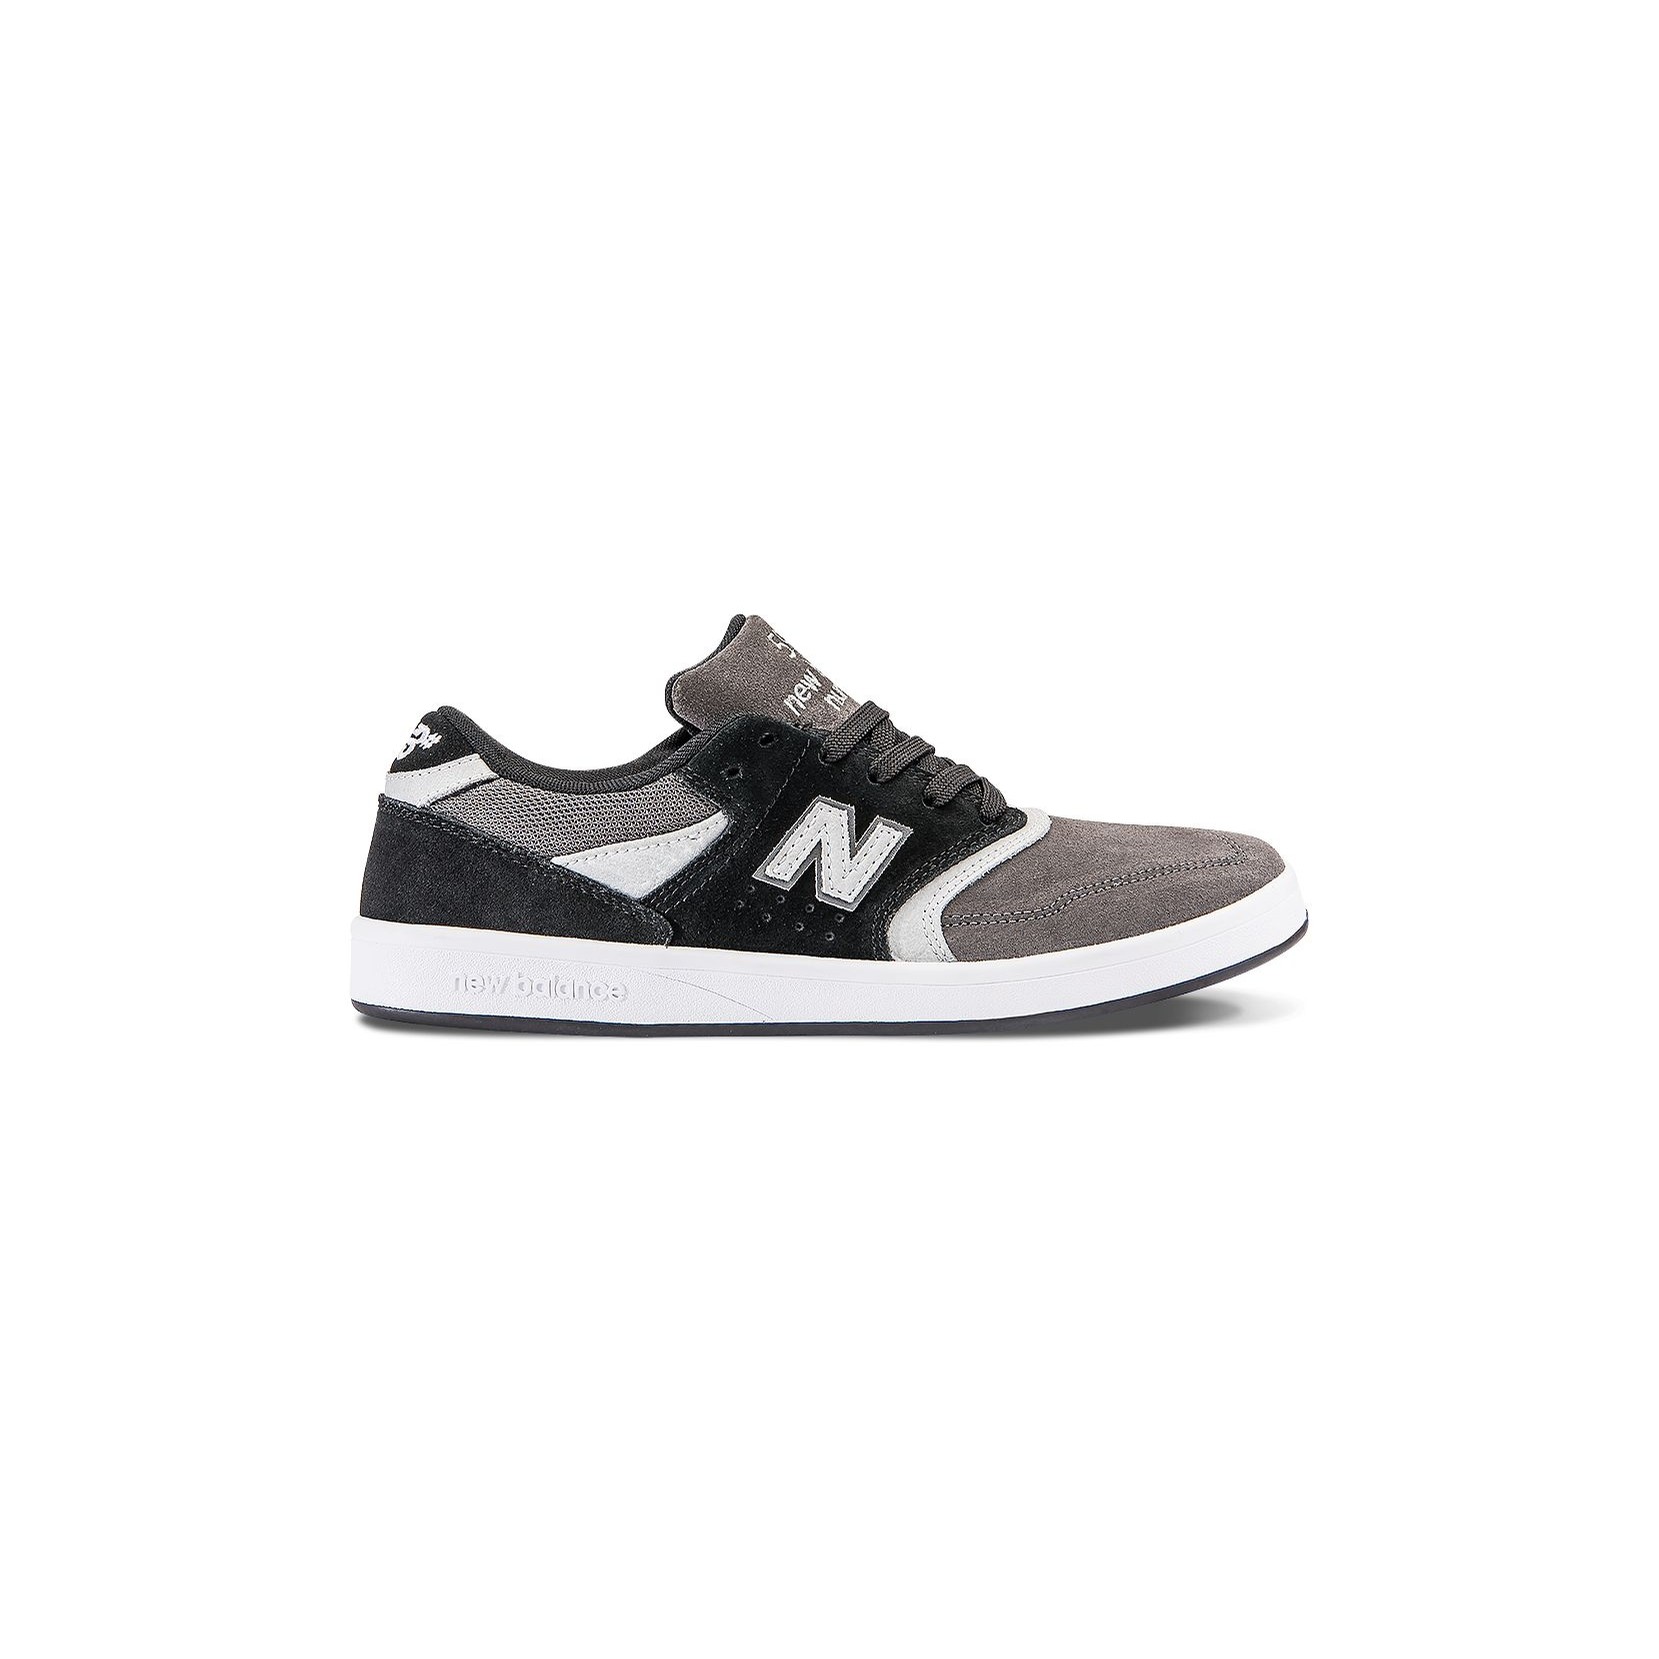 New Balance NB 598 Shoe (Black/Grey) Shoes Mens Mens Shoes at Denver